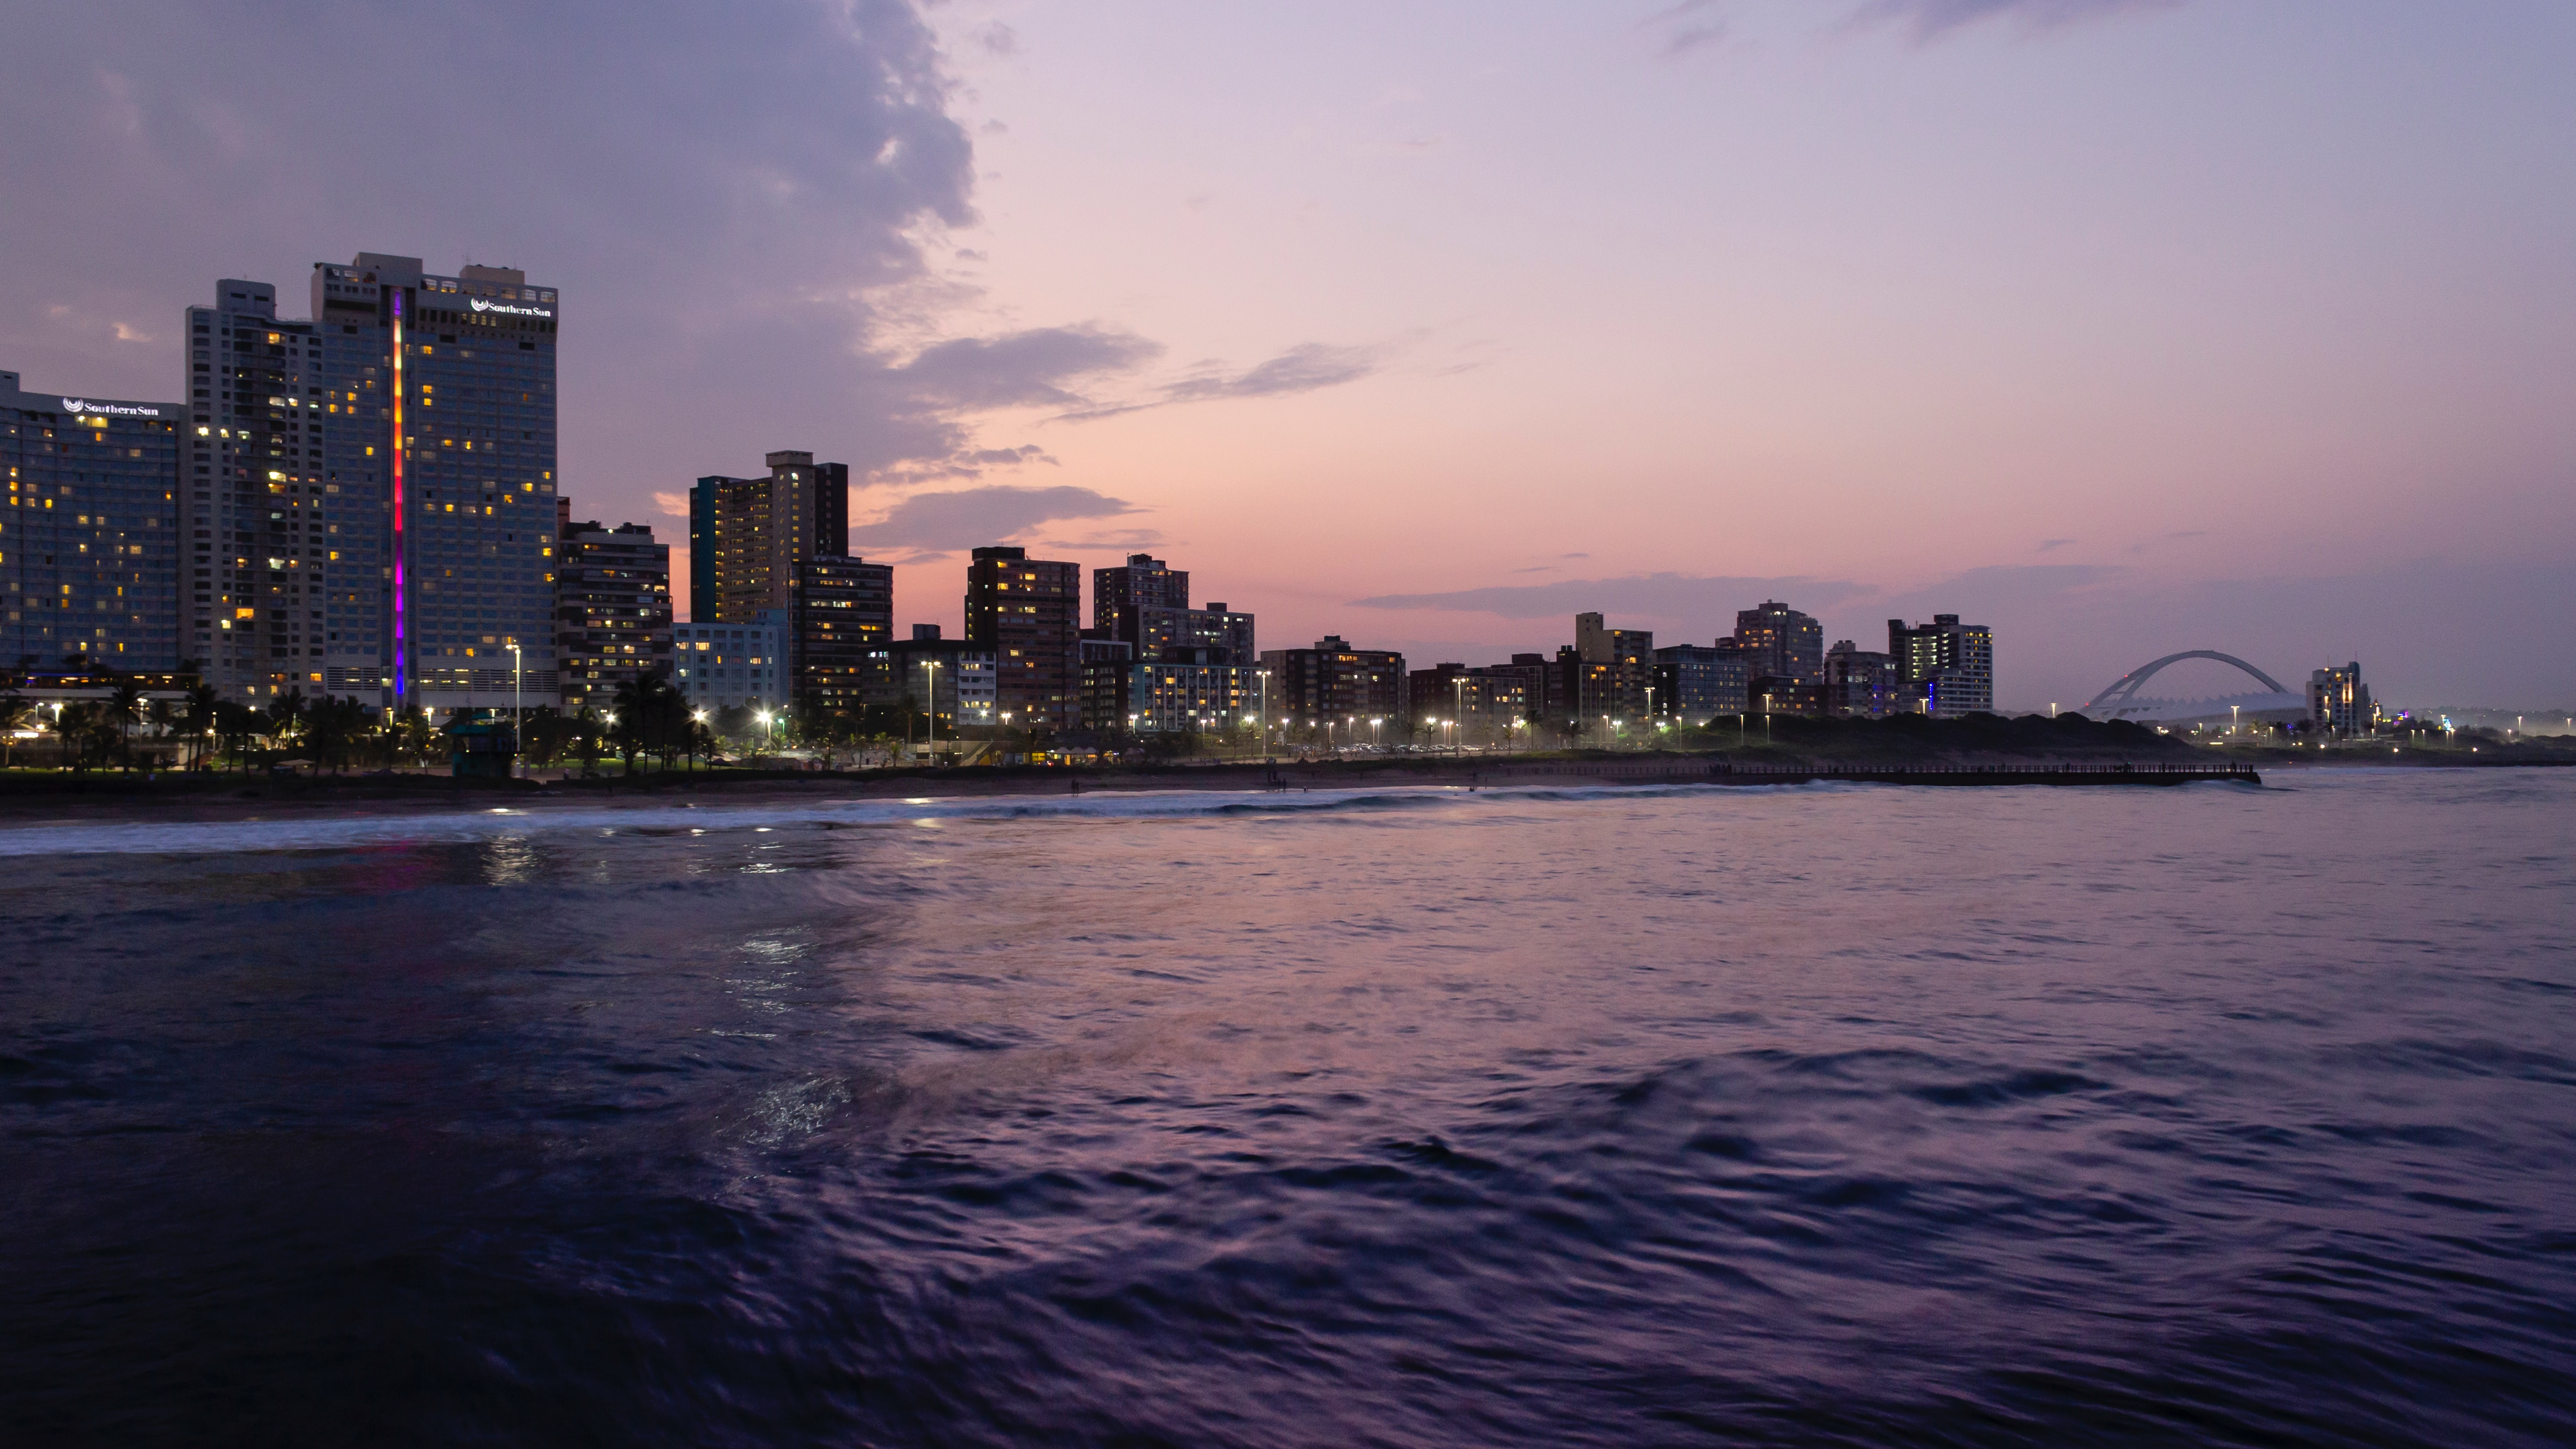 The Durban skyline at night.